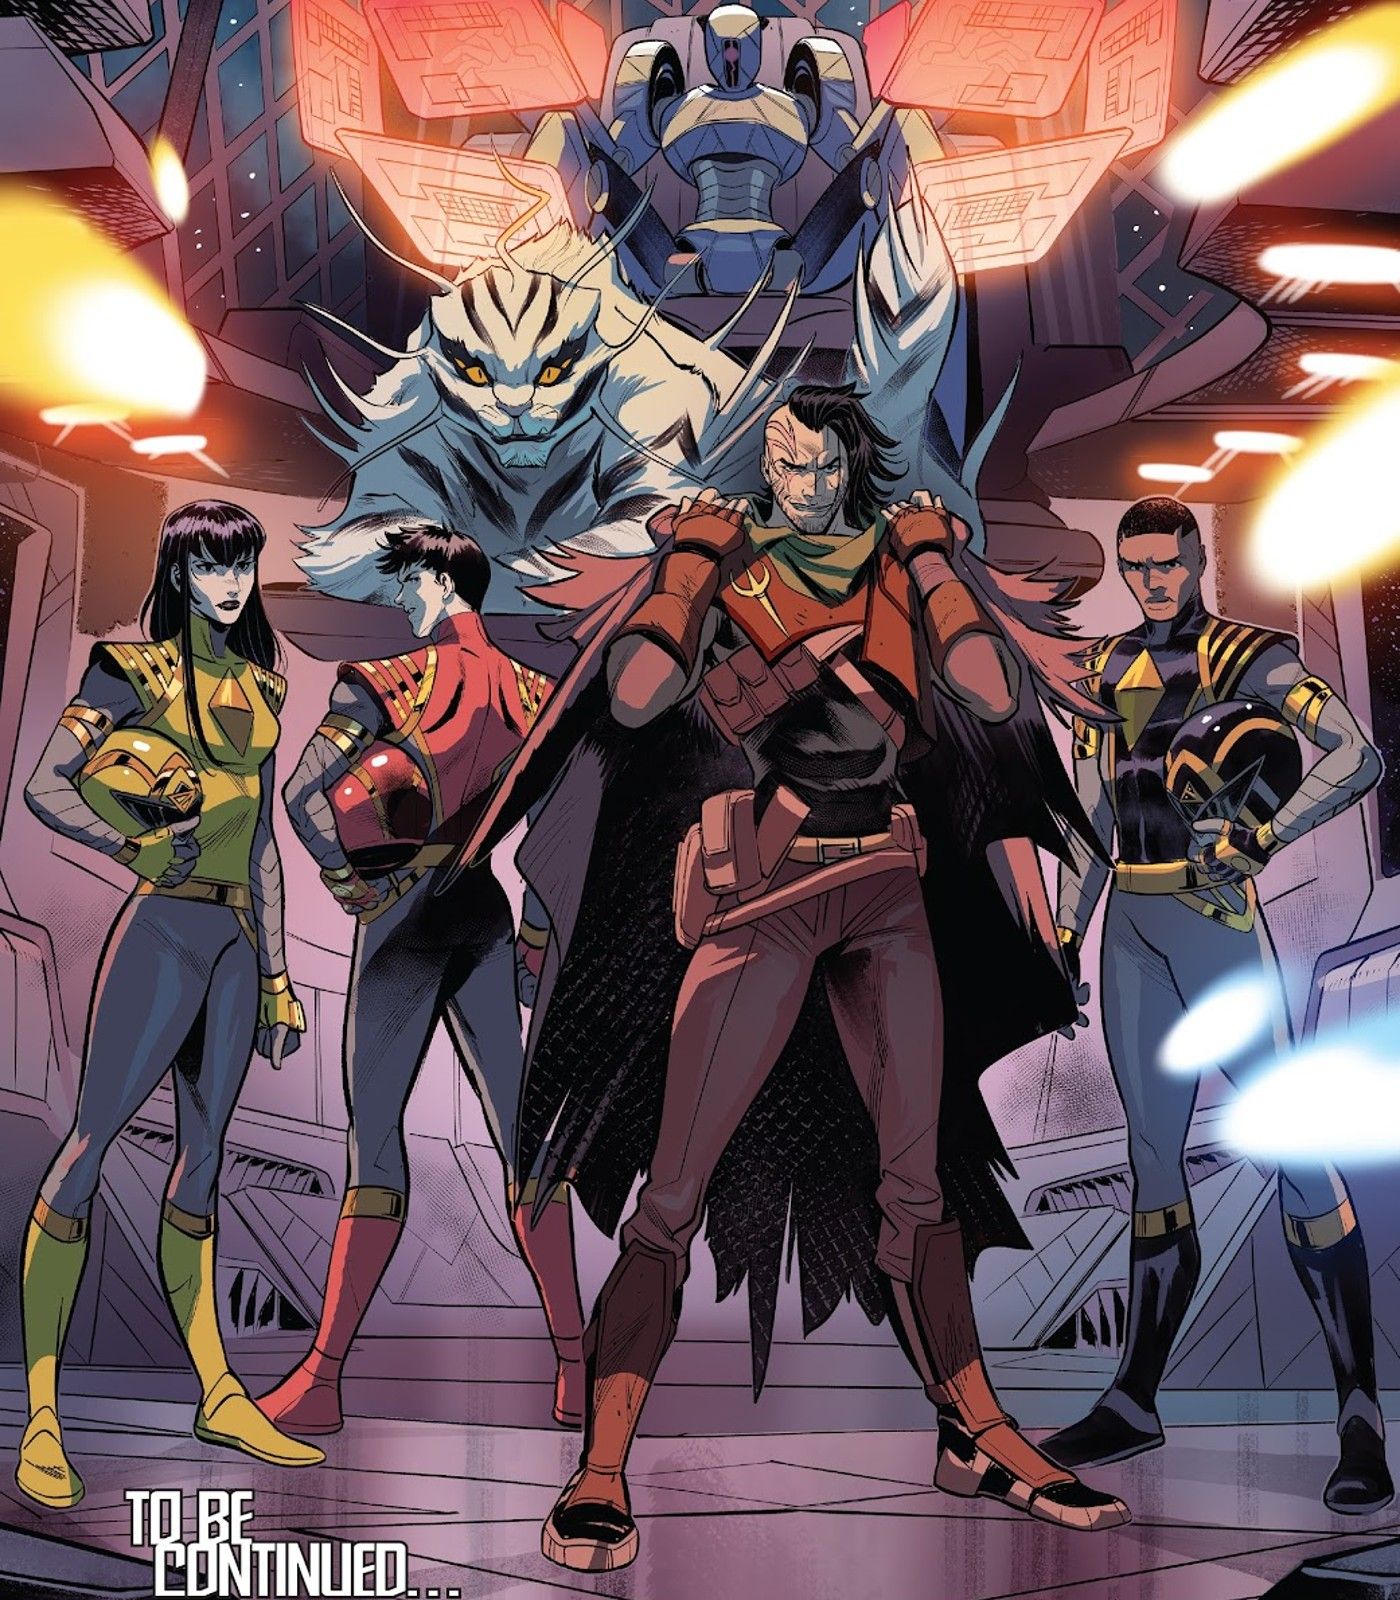 panels from Power Rangers #1, Lord Drakkon alongside the Omega Rangers